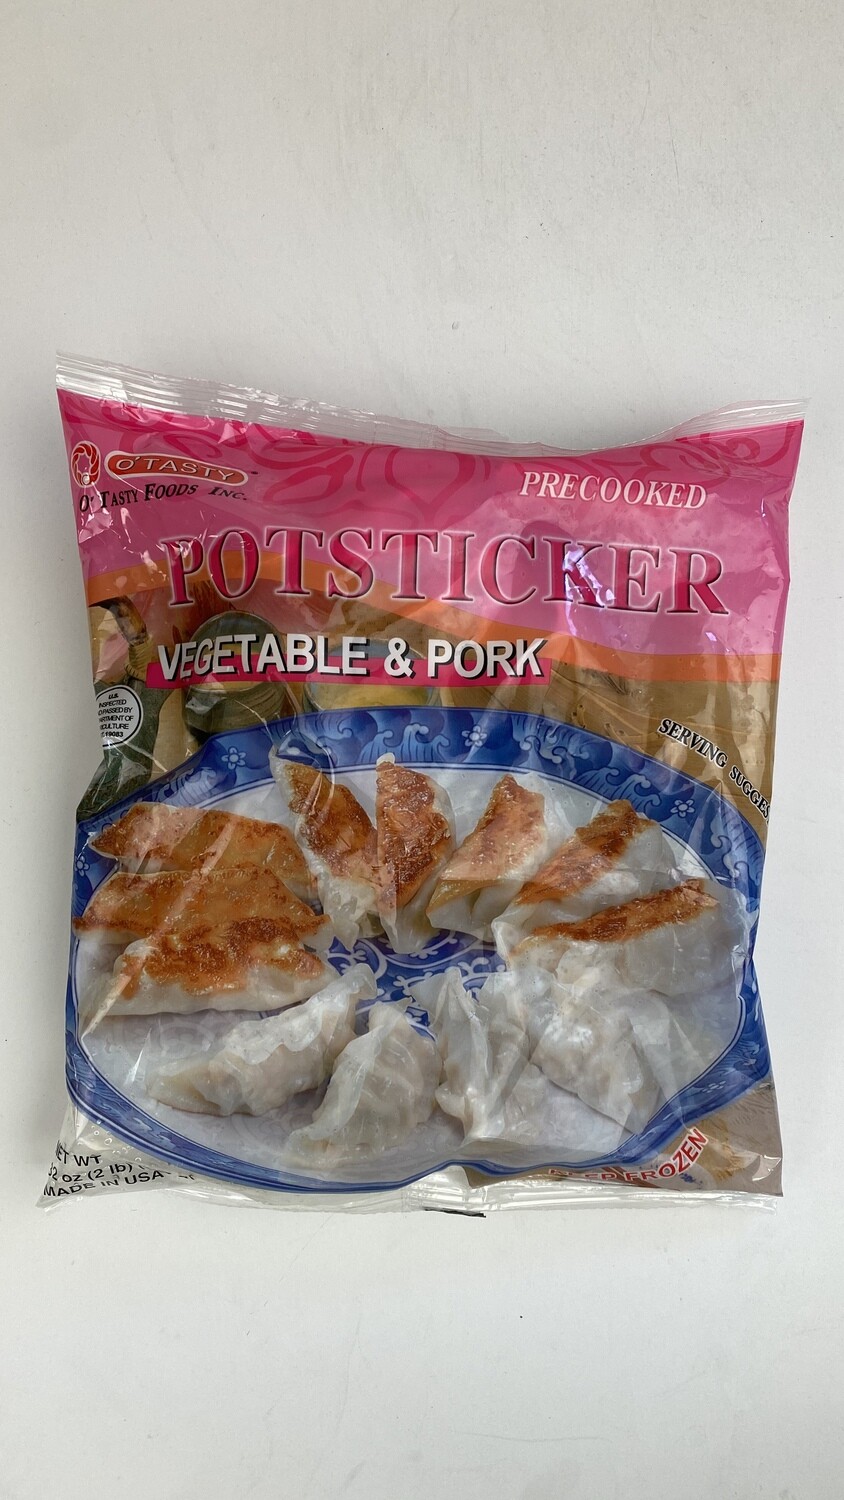 O'TASTY Potsticker Vegetable & Pork 32oz 全美即食锅贴